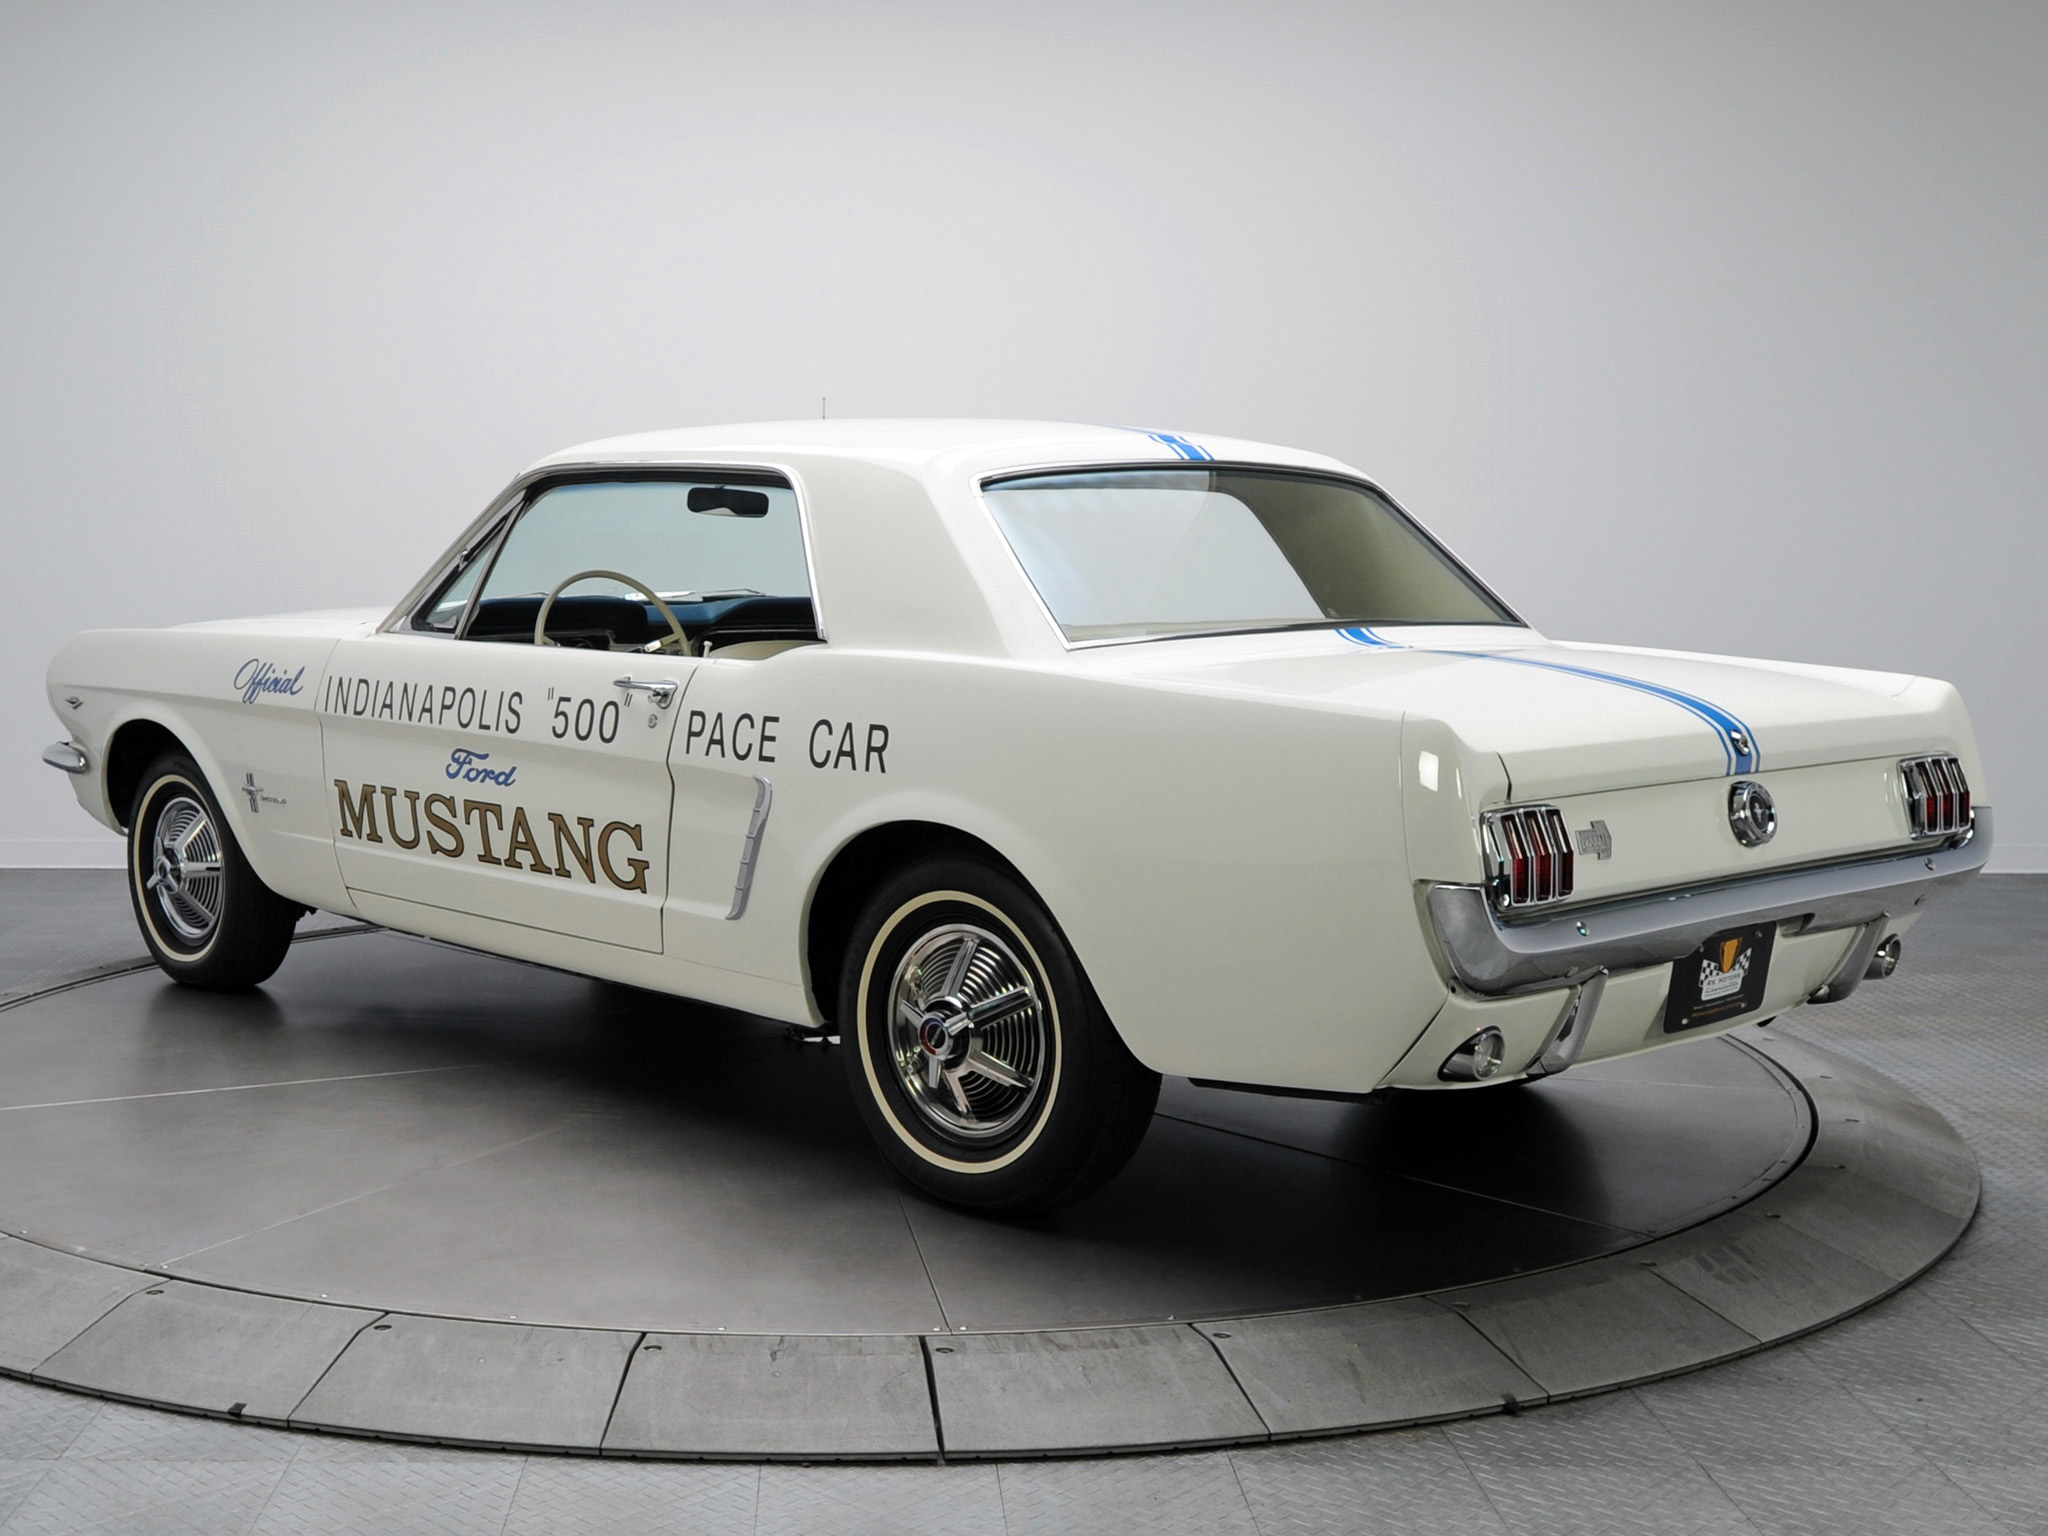 1964 Mustang Race Car - HD Wallpaper 